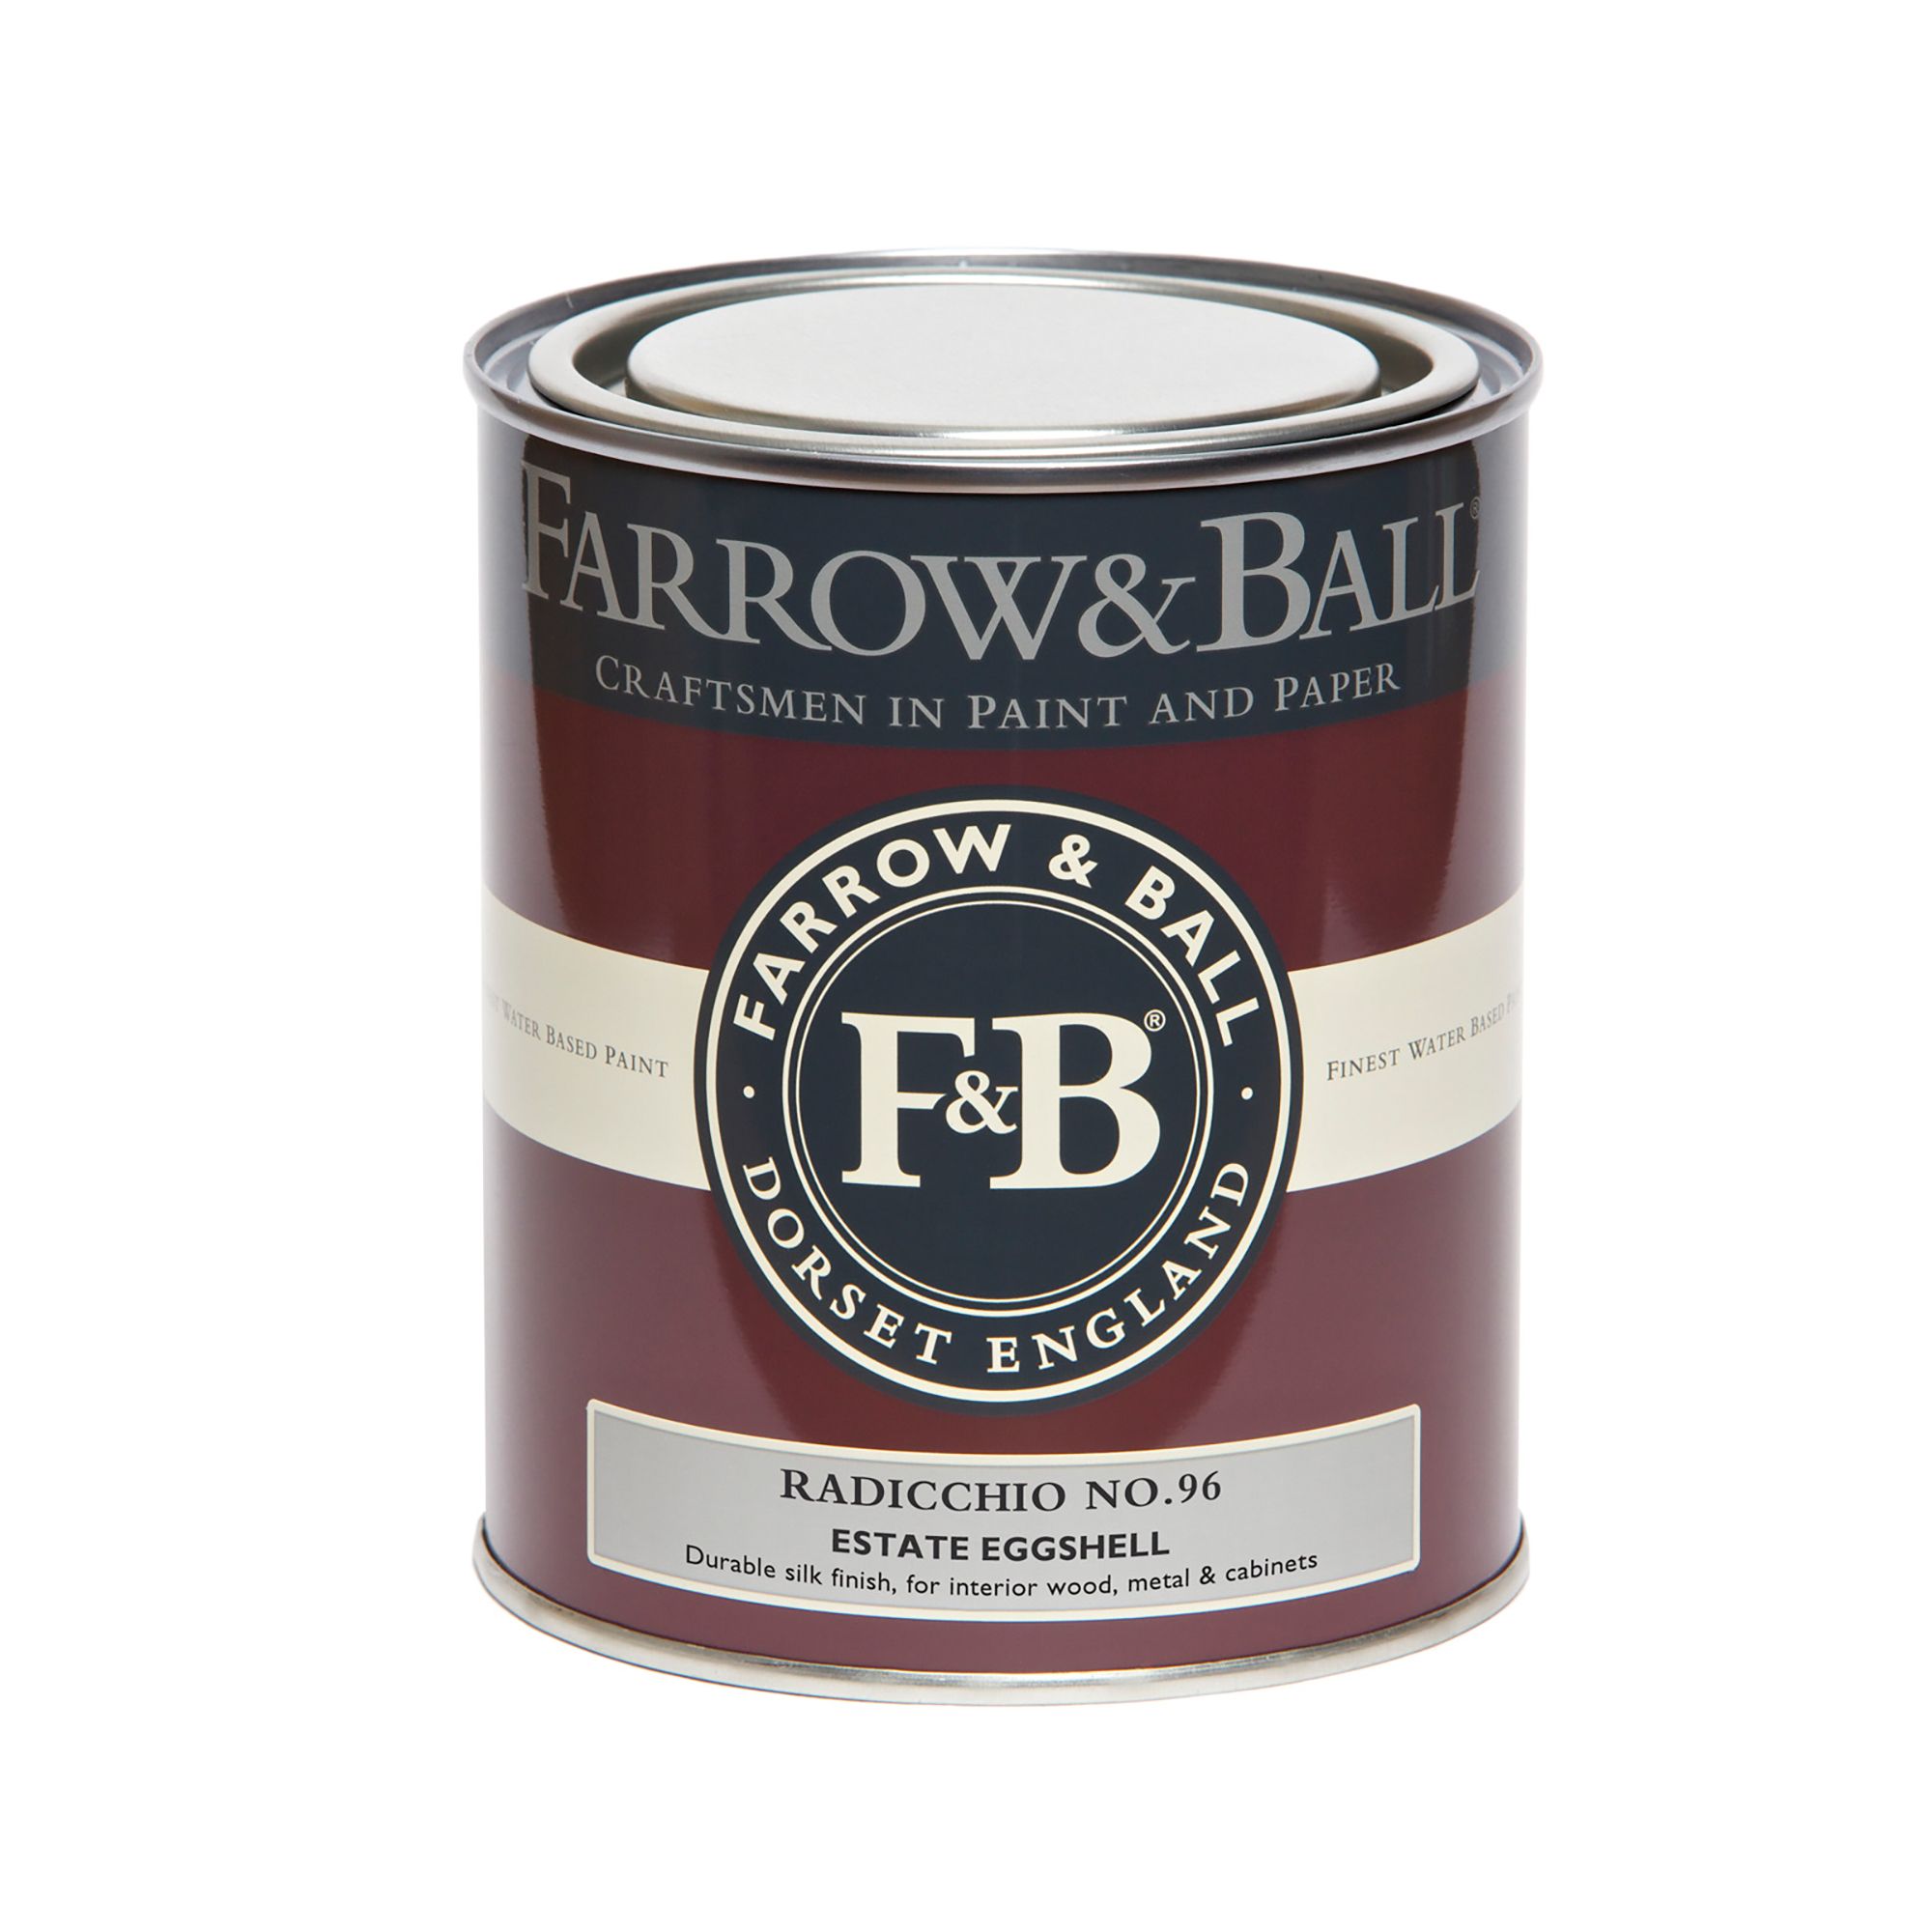 Farrow & Ball Estate Radicchio No.96 Eggshell Paint, 750ml